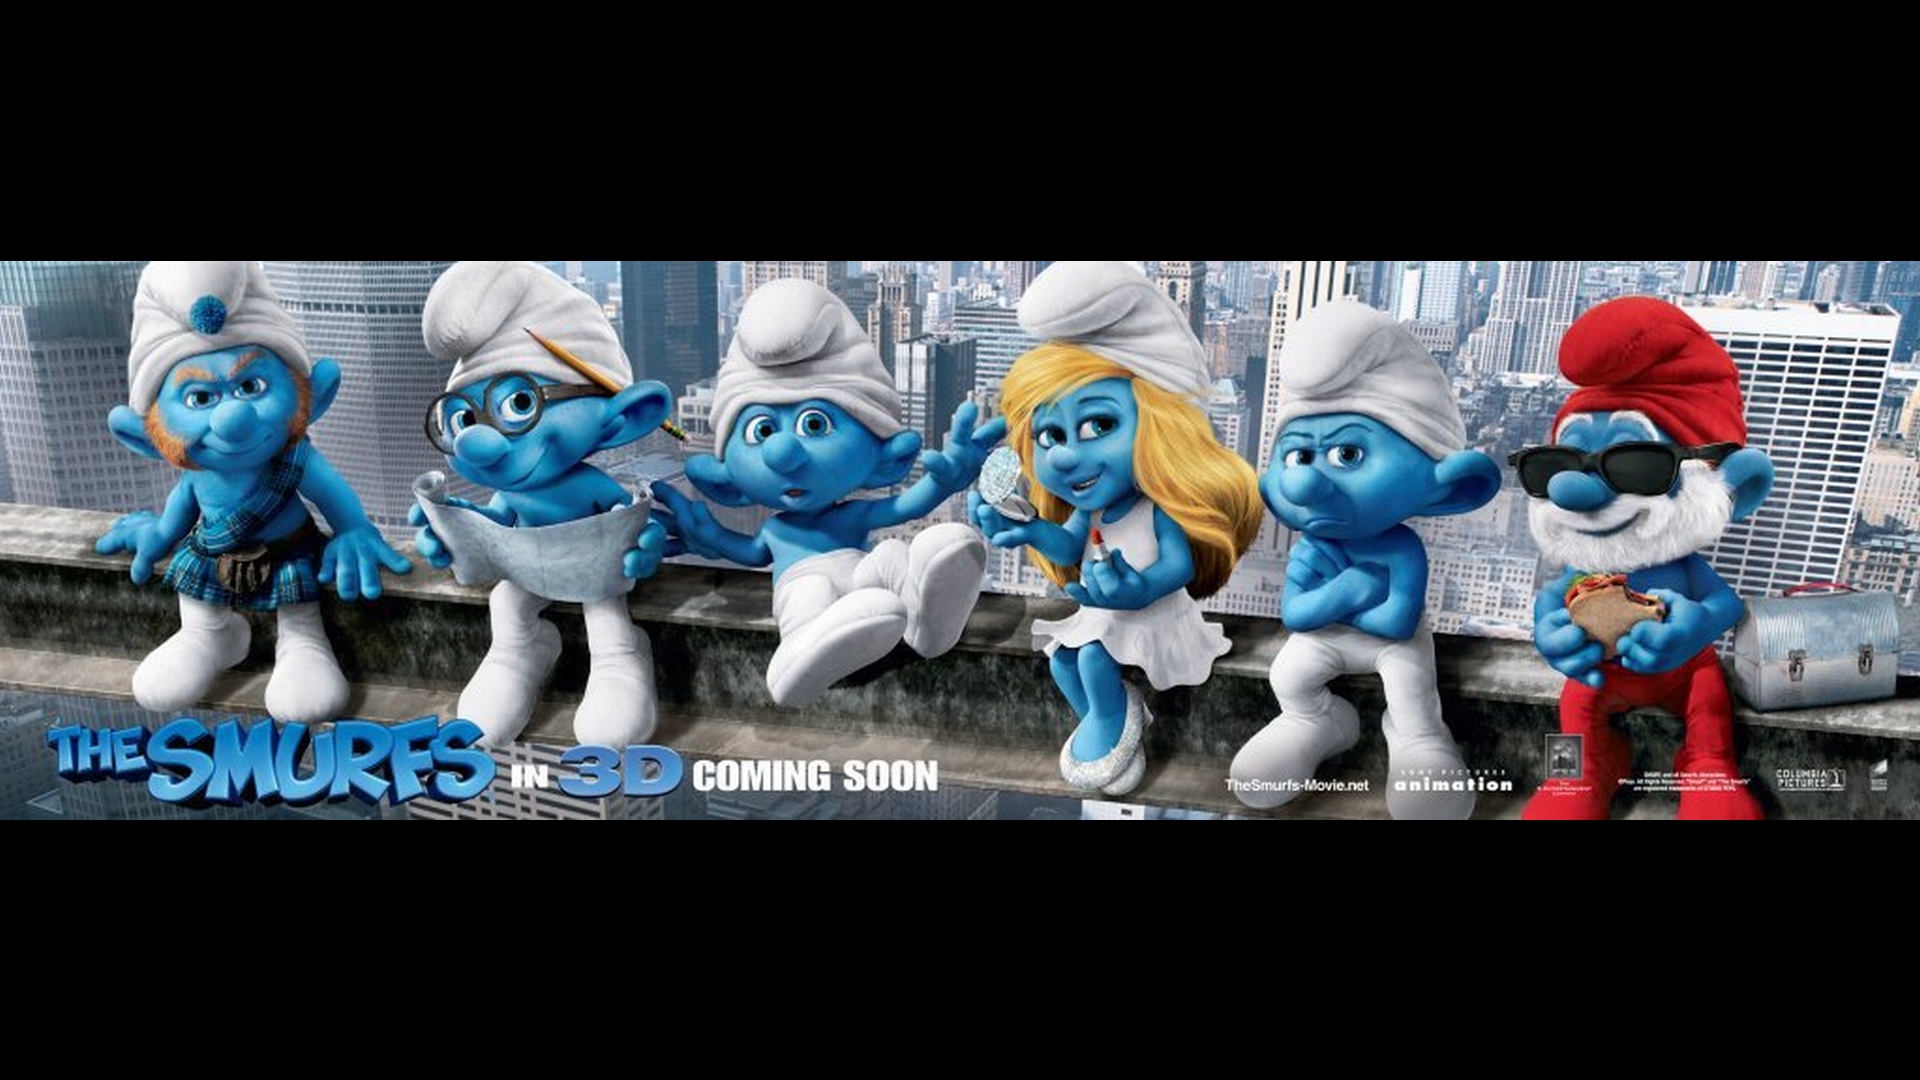 movie, the smurfs Image for desktop